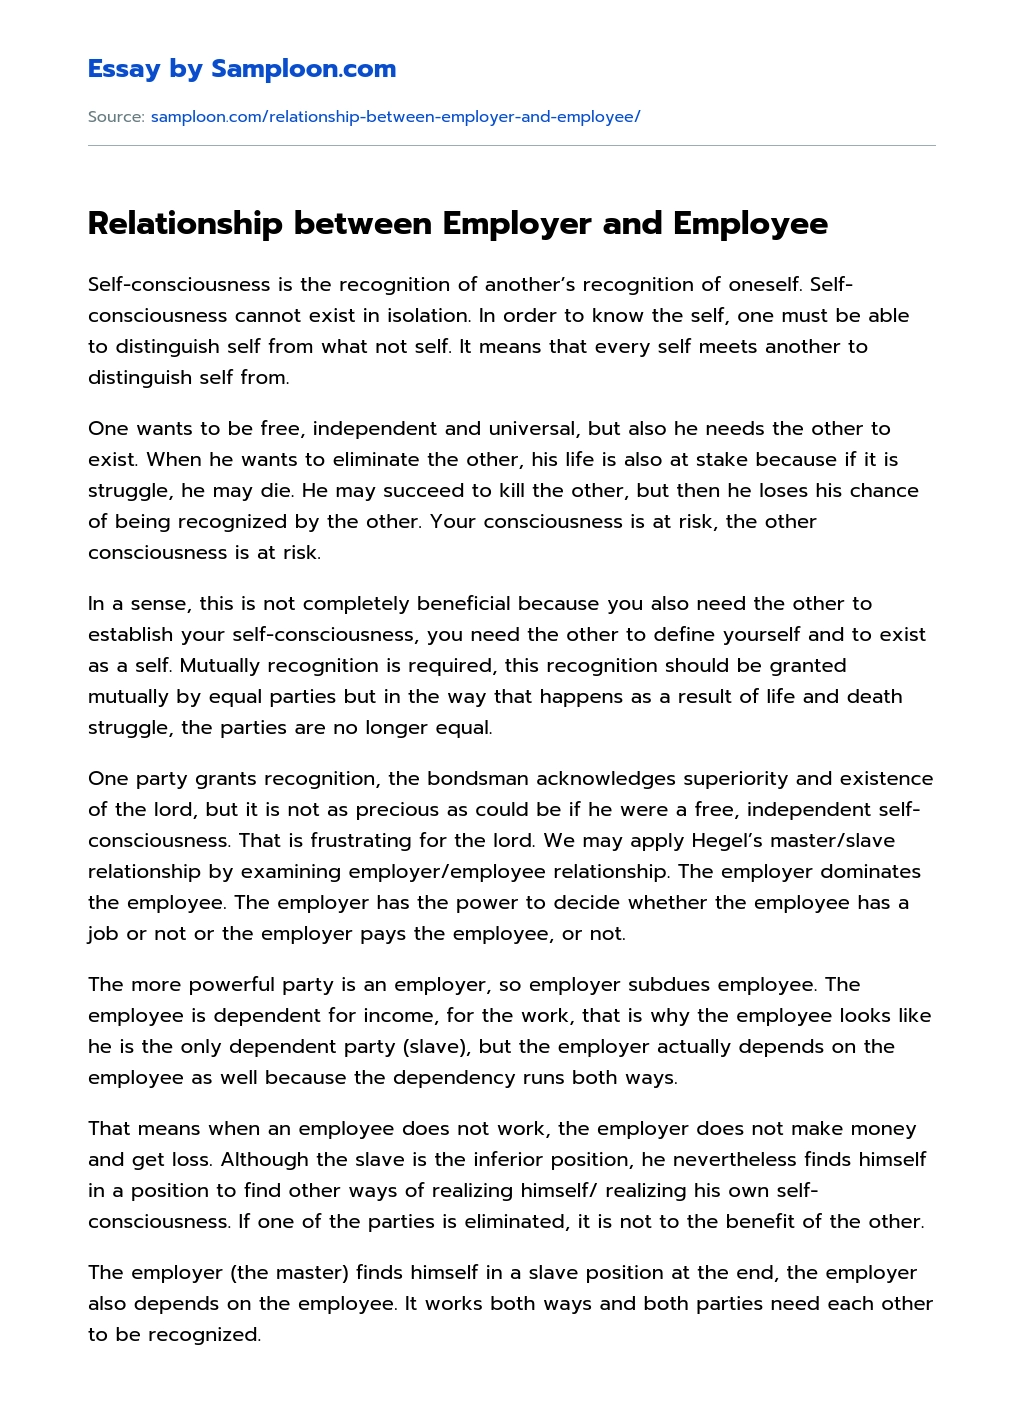 Relationship between Employer and Employee essay